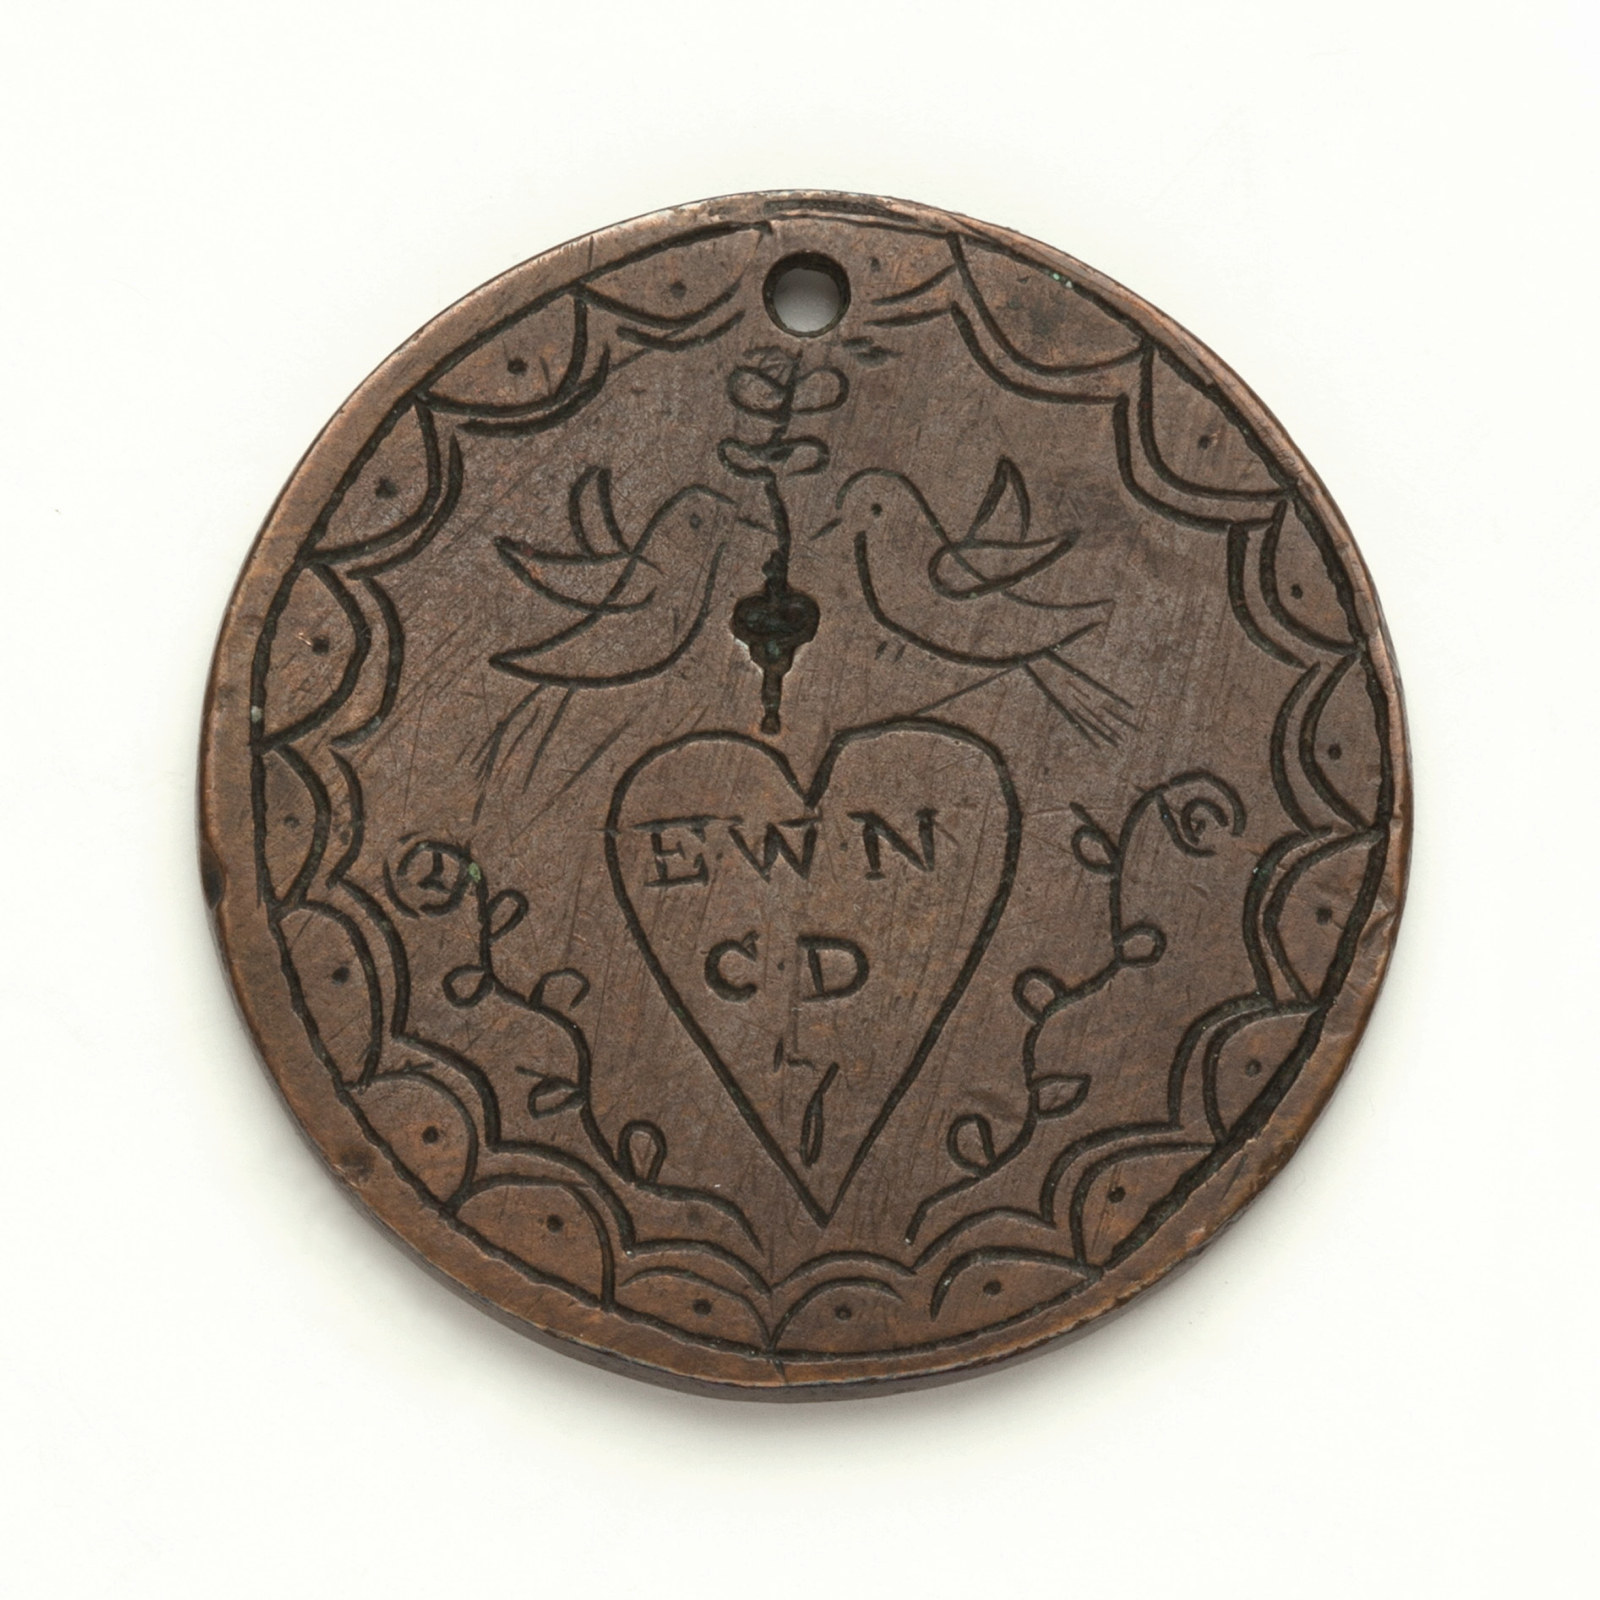 Convict love token, 1825